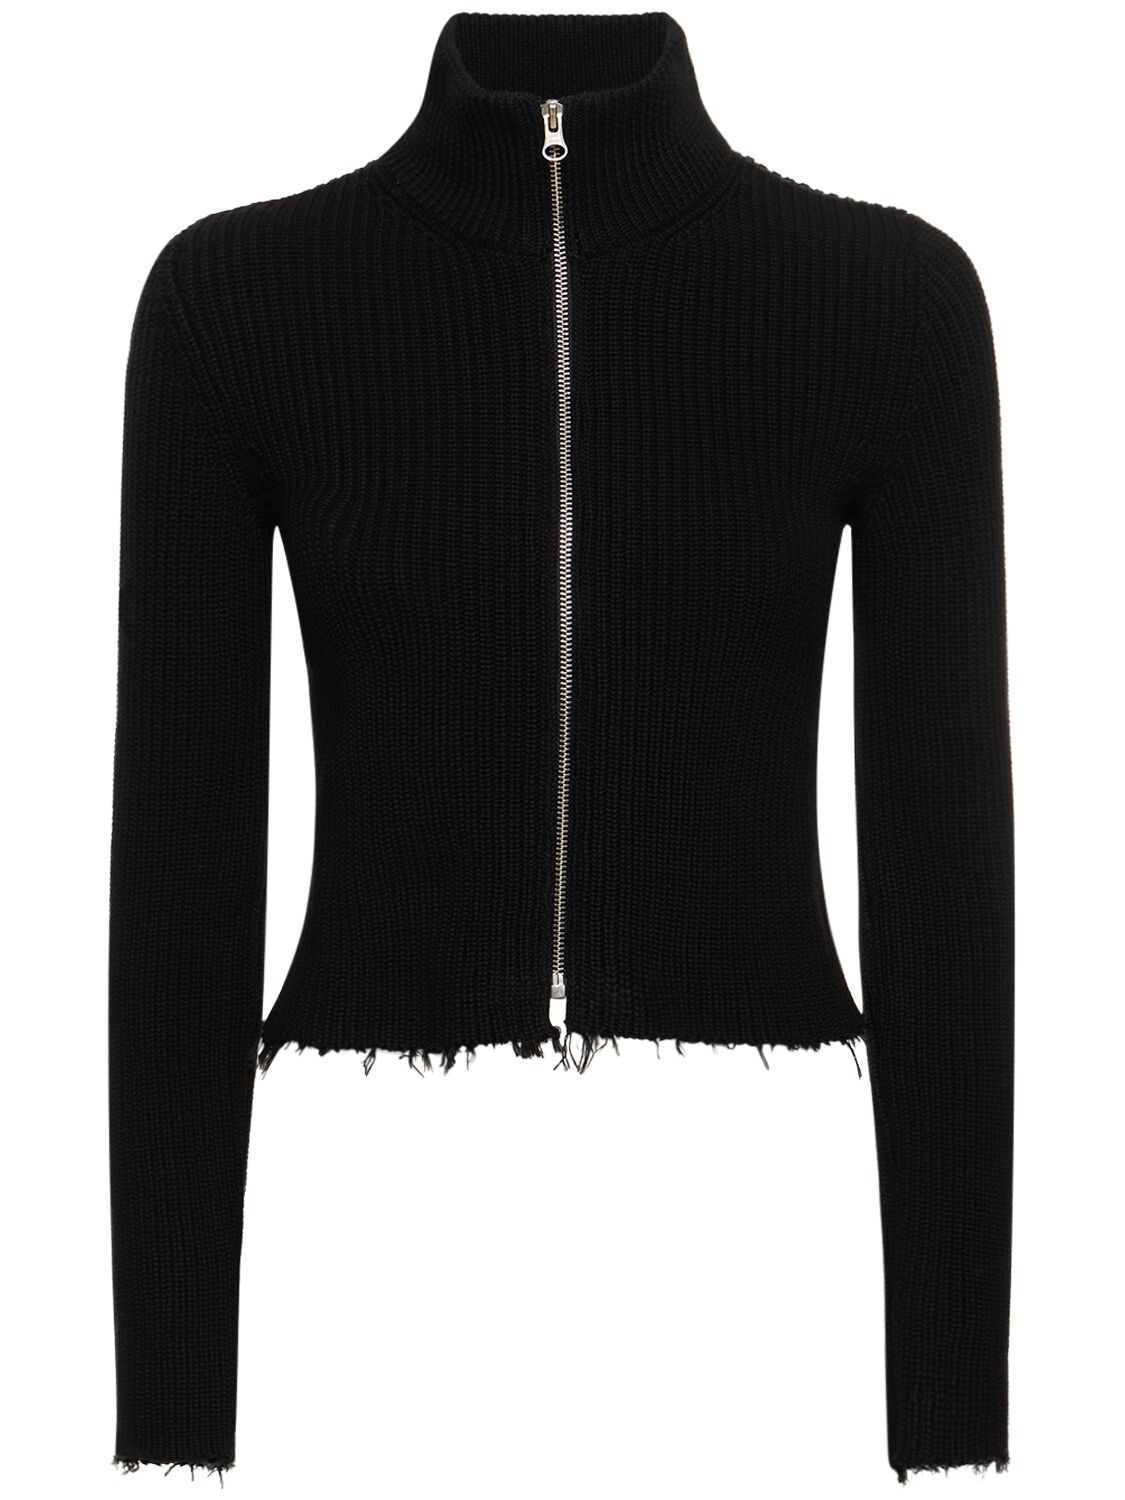 Mm6 Maison Margiela Knitted Cotton Jacket In Black